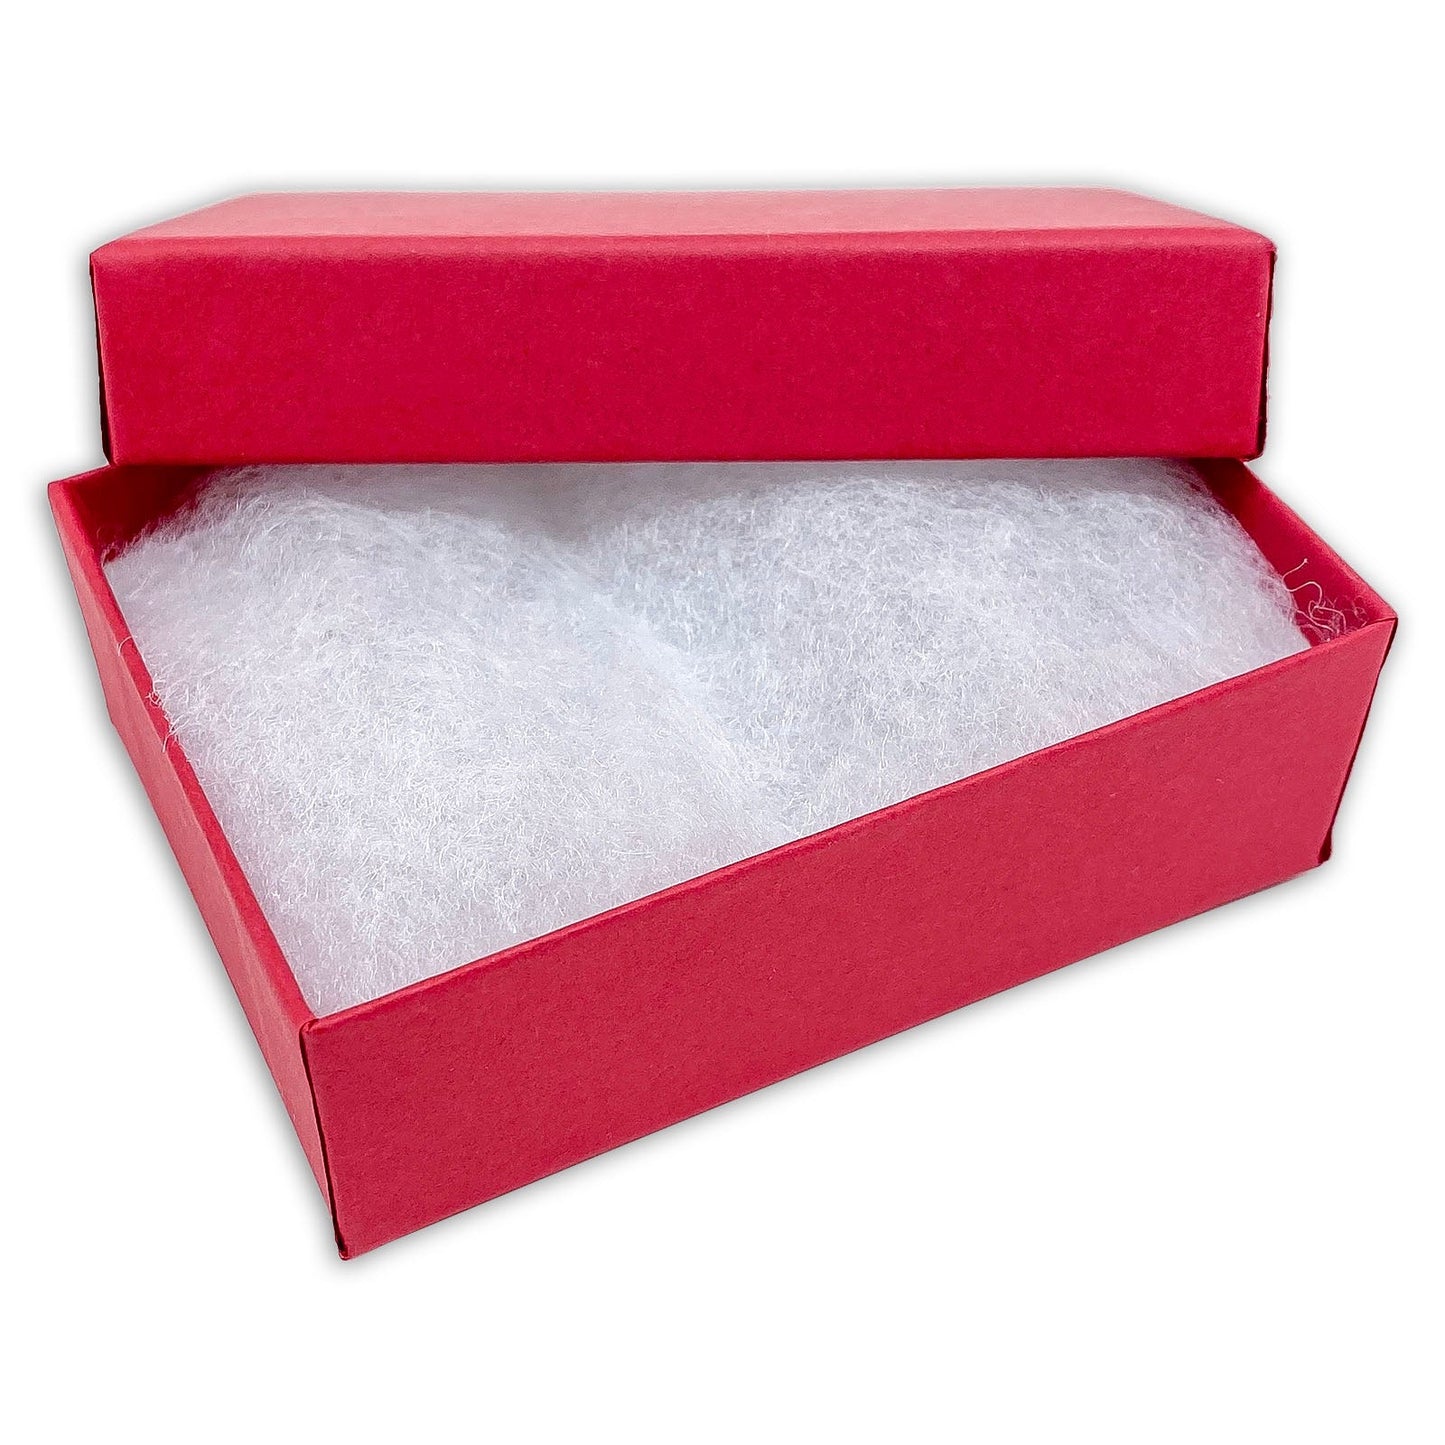 #32 - 3 1/4" x 2 1/4" x 1" Matte Red Cotton Filled Paper Box